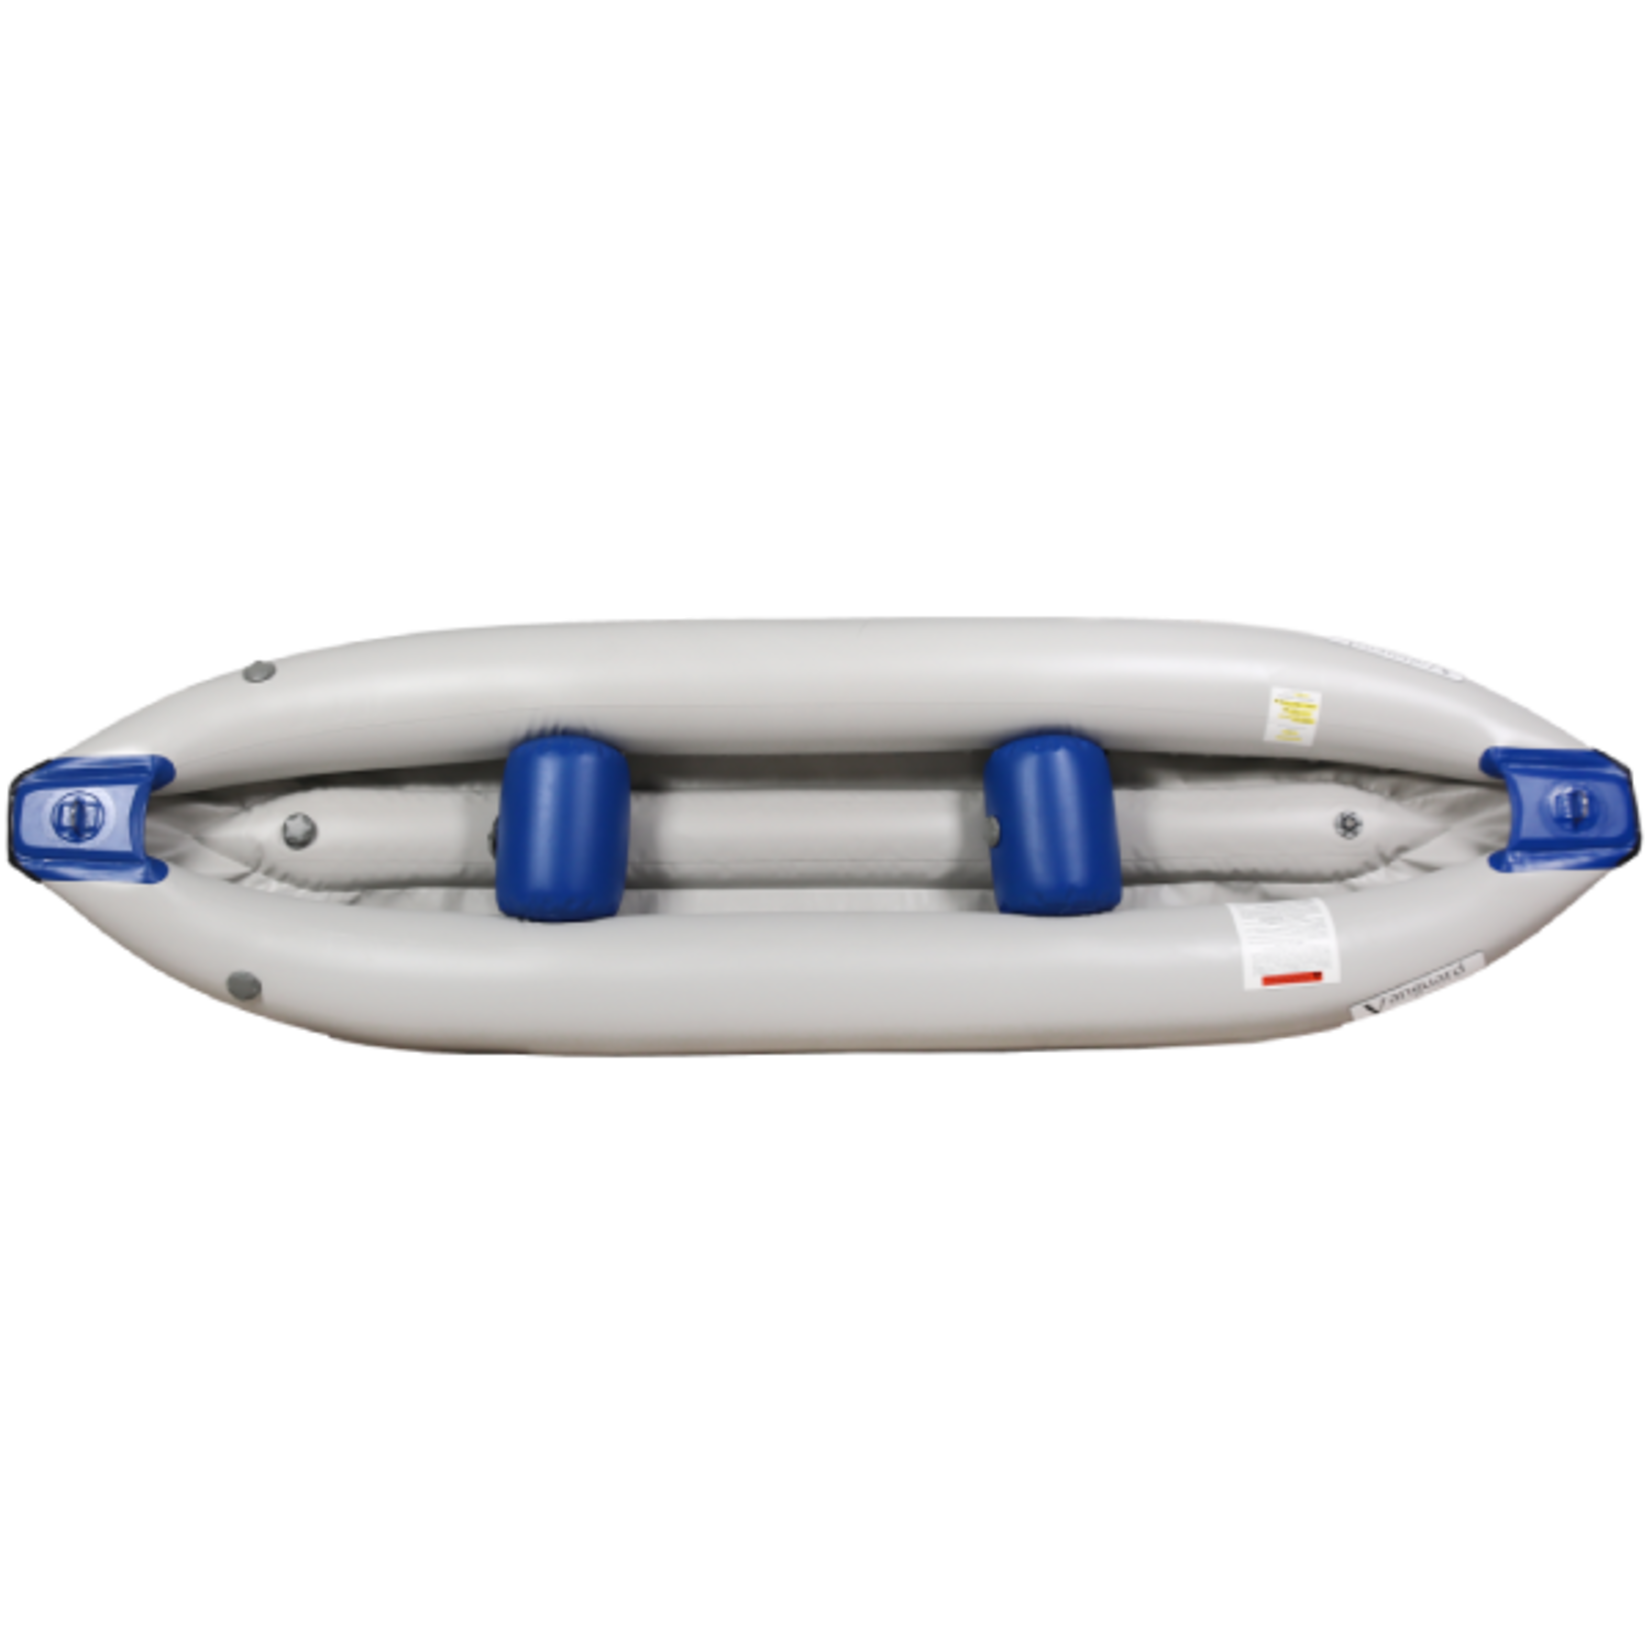 Vanguard Inflatables Vanguard 2-Person Self Bailing Kayak